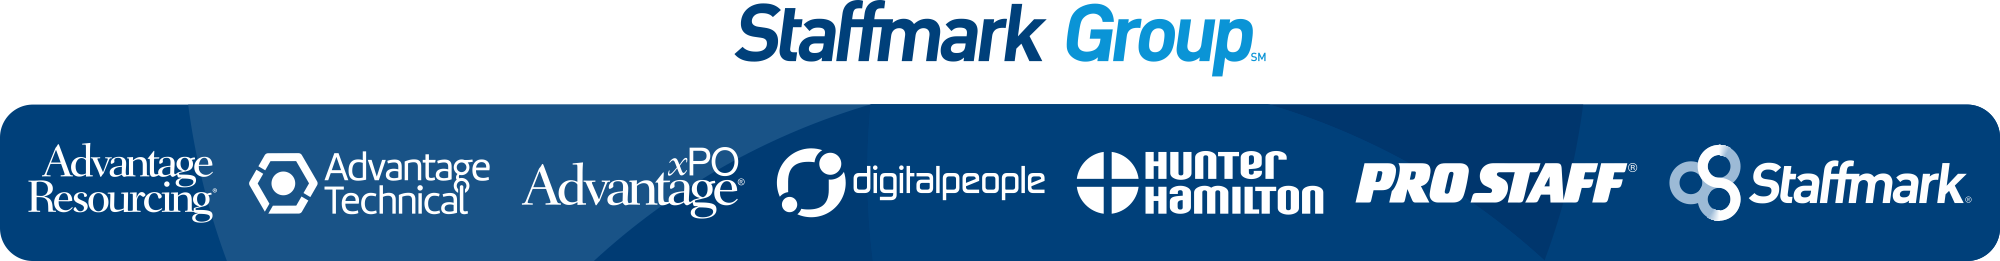 Staffmark Group and brands logo image